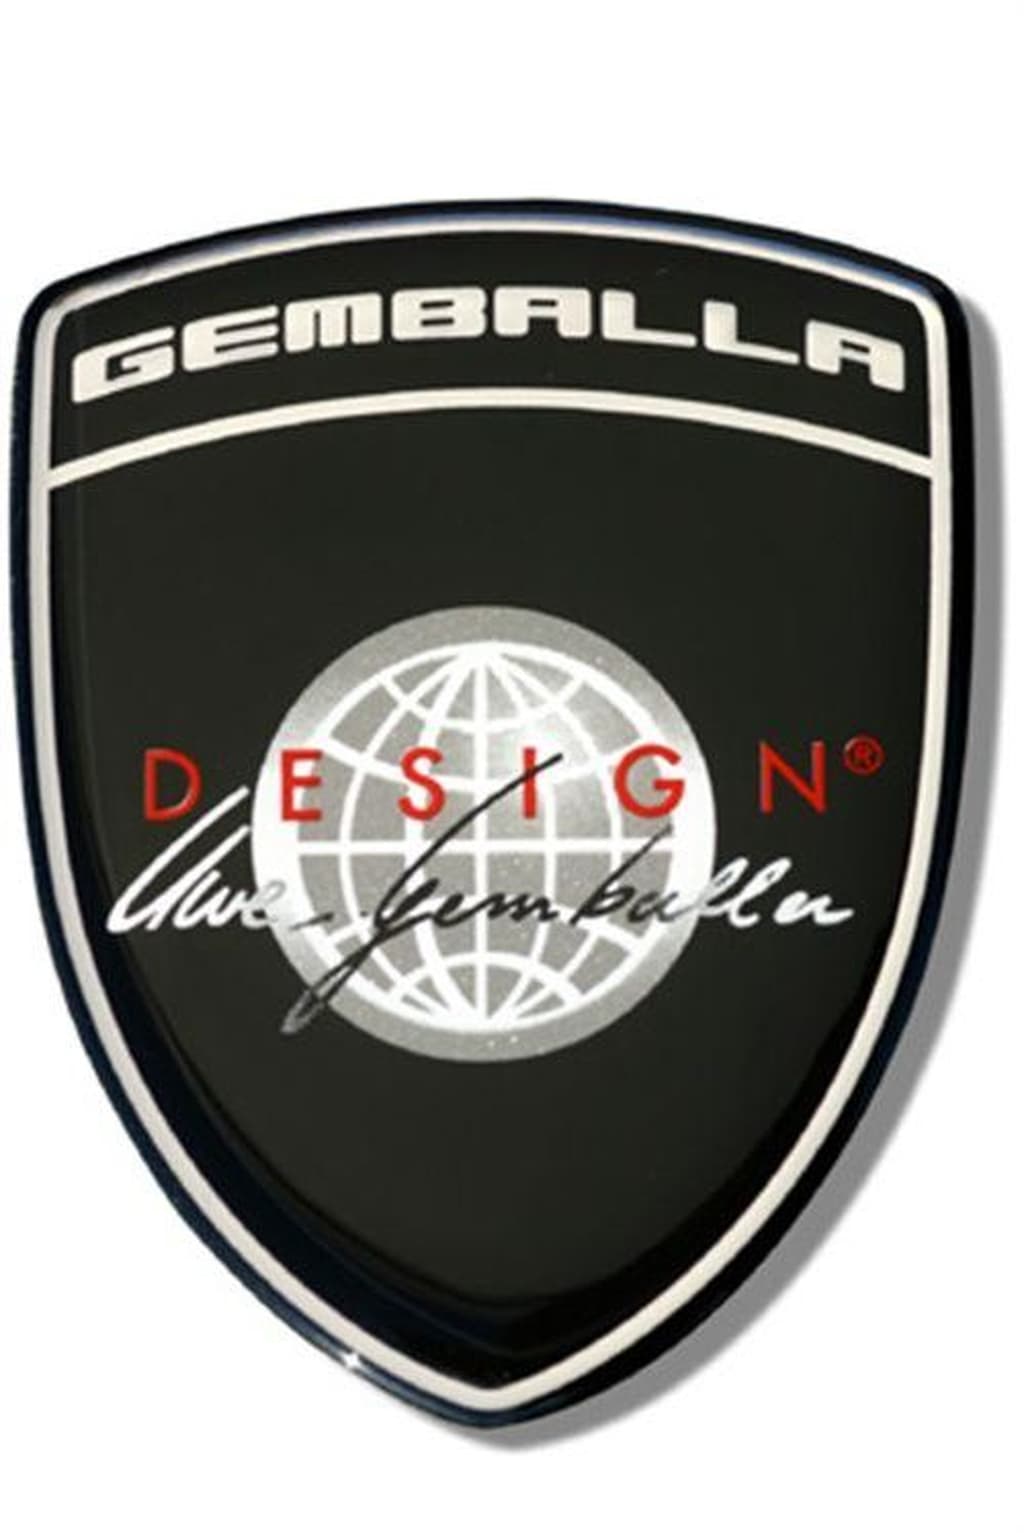 Gemballa Logo - Gemballa Porsche - motoring.com.au